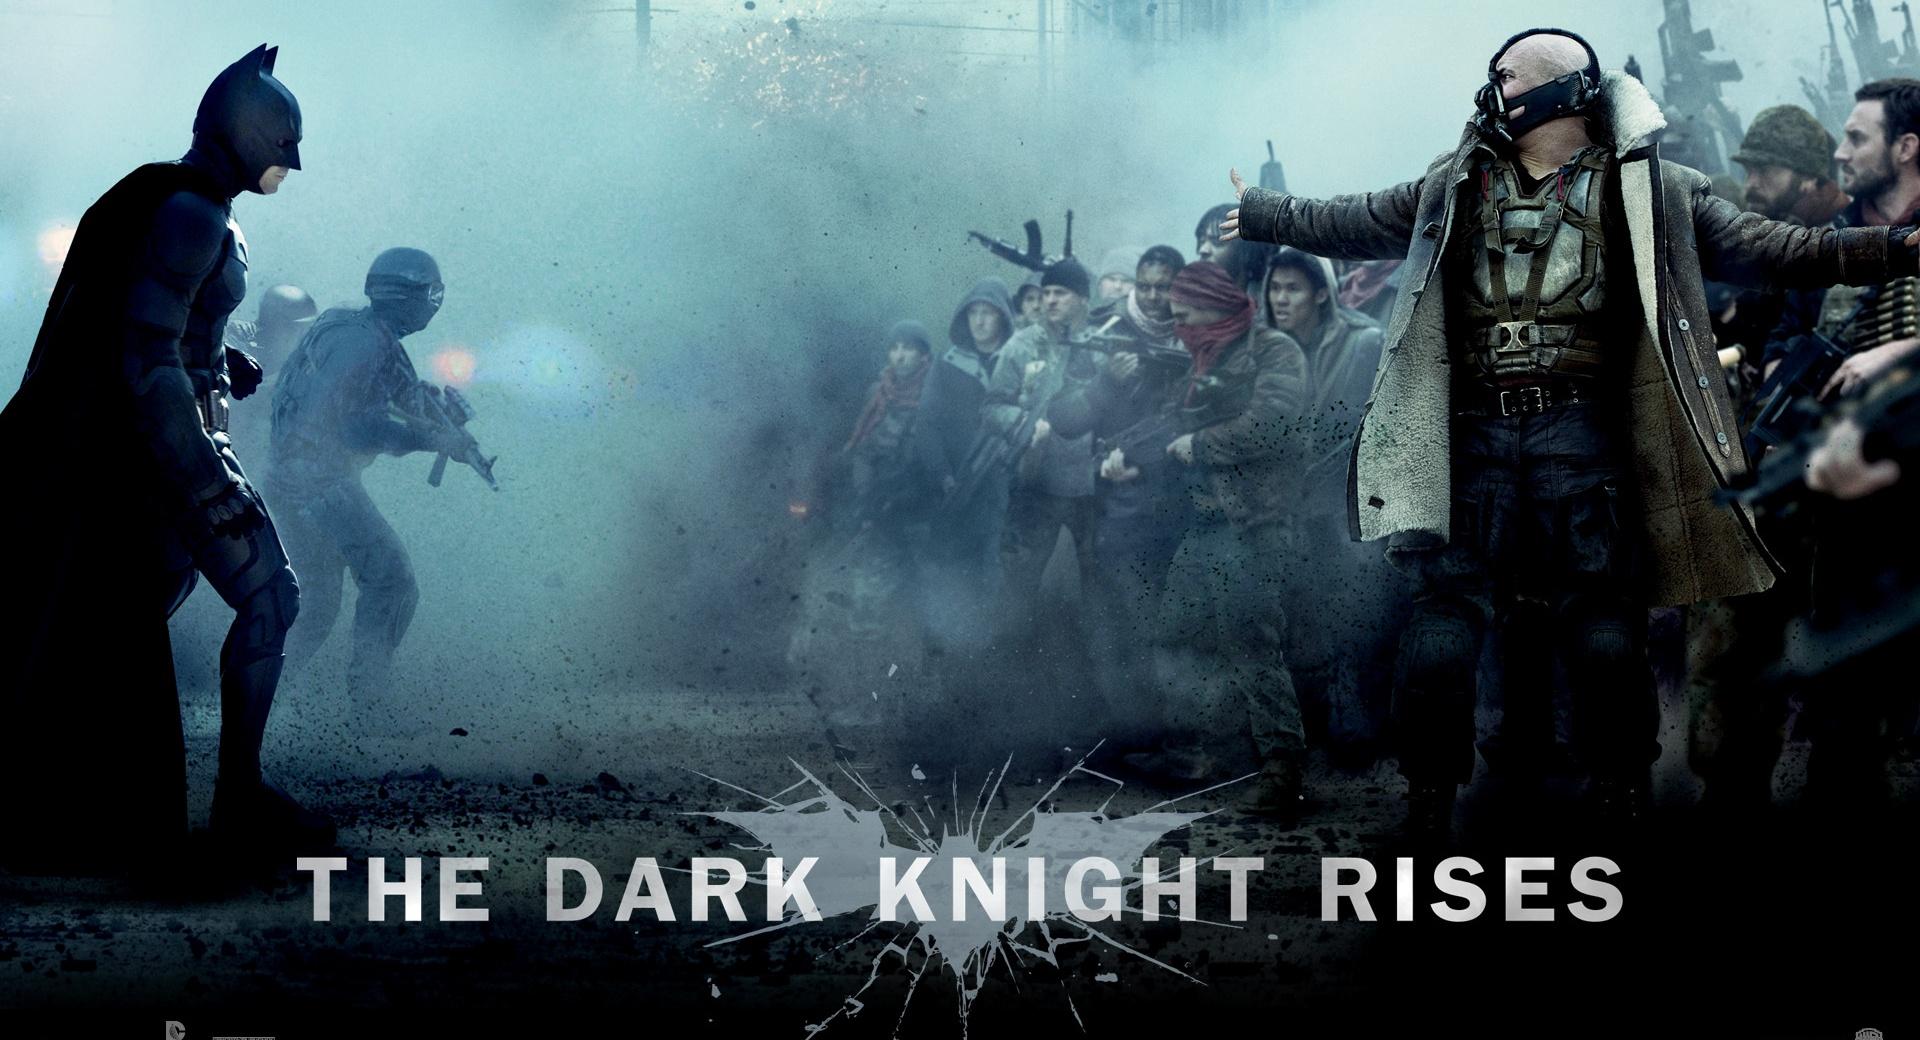 The Dark Knight Rises Bane Vs Batman at 1280 x 960 size wallpapers HD quality